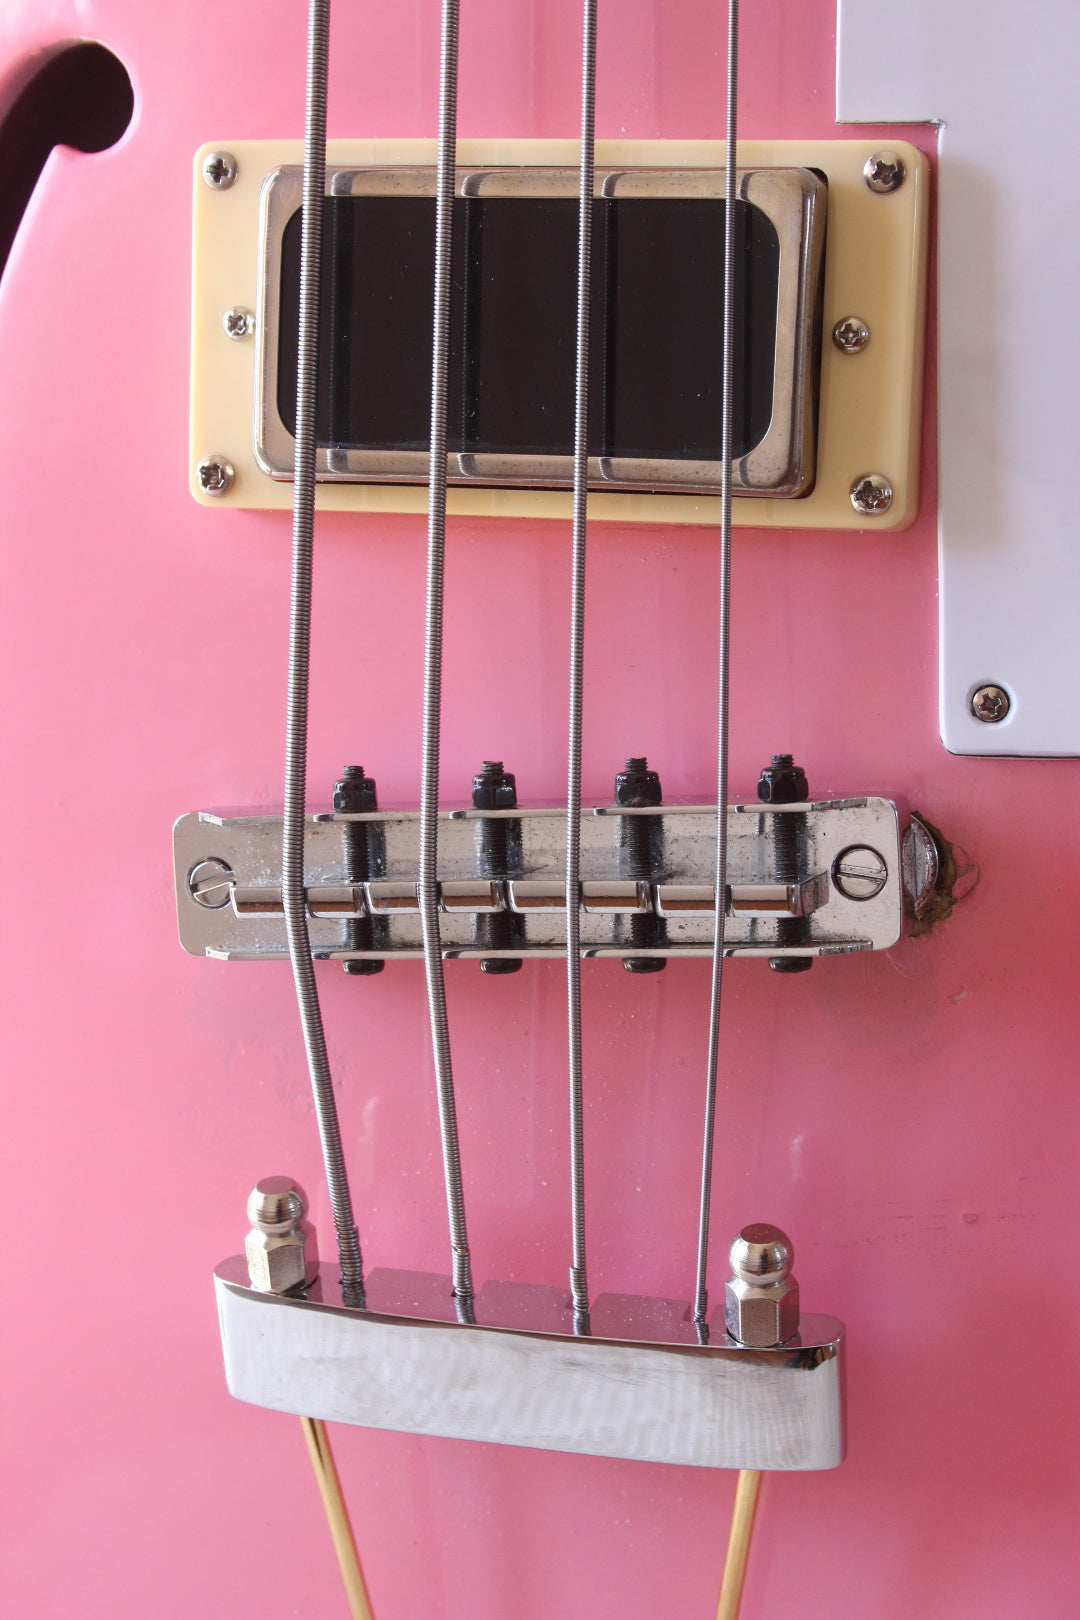 Duesenberg Starplayer Bass Fretless Refinished Pink